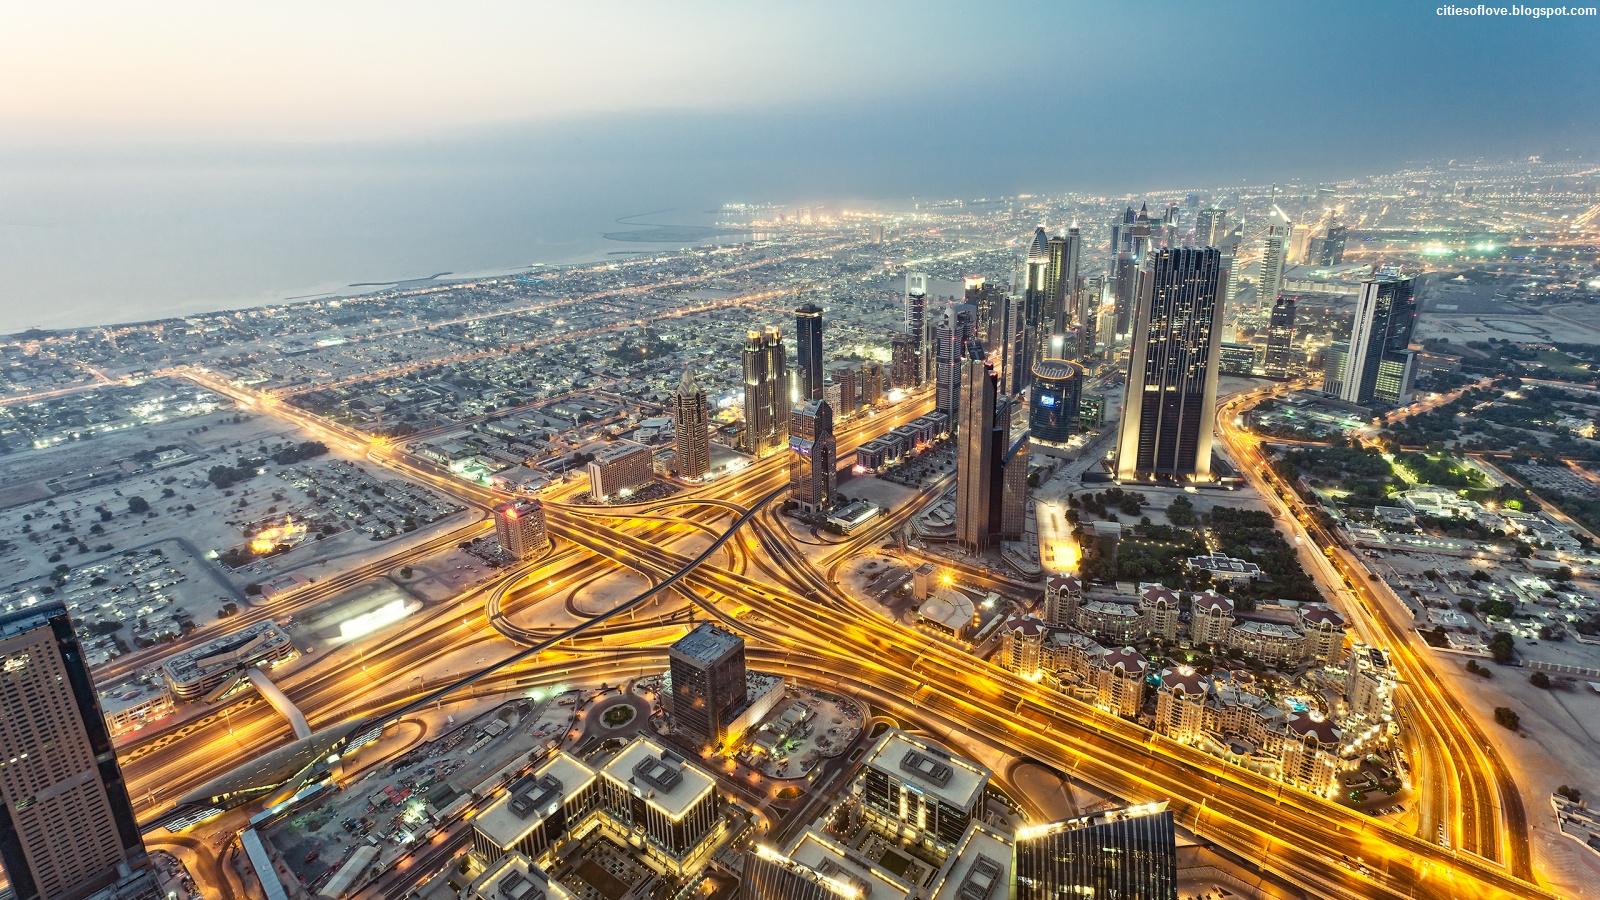 https://blogger.googleusercontent.com/img/b/R29vZ2xl/AVvXsEgZ4xiXjiOq34i99V0QLHK3KVoJ1t4hOrmK5Jnf0CrmfVIIOzMrbxXm5olYFr6C7UlmaY9h6KeBOCpgU1ugl05Fp8SUZPfq9eMyhxvZeGi5nWu4tywbK2pQHxhUbNiZOCihBiCKcWyk7qMf/s1600/Dubai_Wonderful_View_From_The_Tallest_Building_Burj_Khalifa_United_Arab_Emirates_Hd_Desktop_Wallpaper_citiesoflove.blogspot.com.jpg